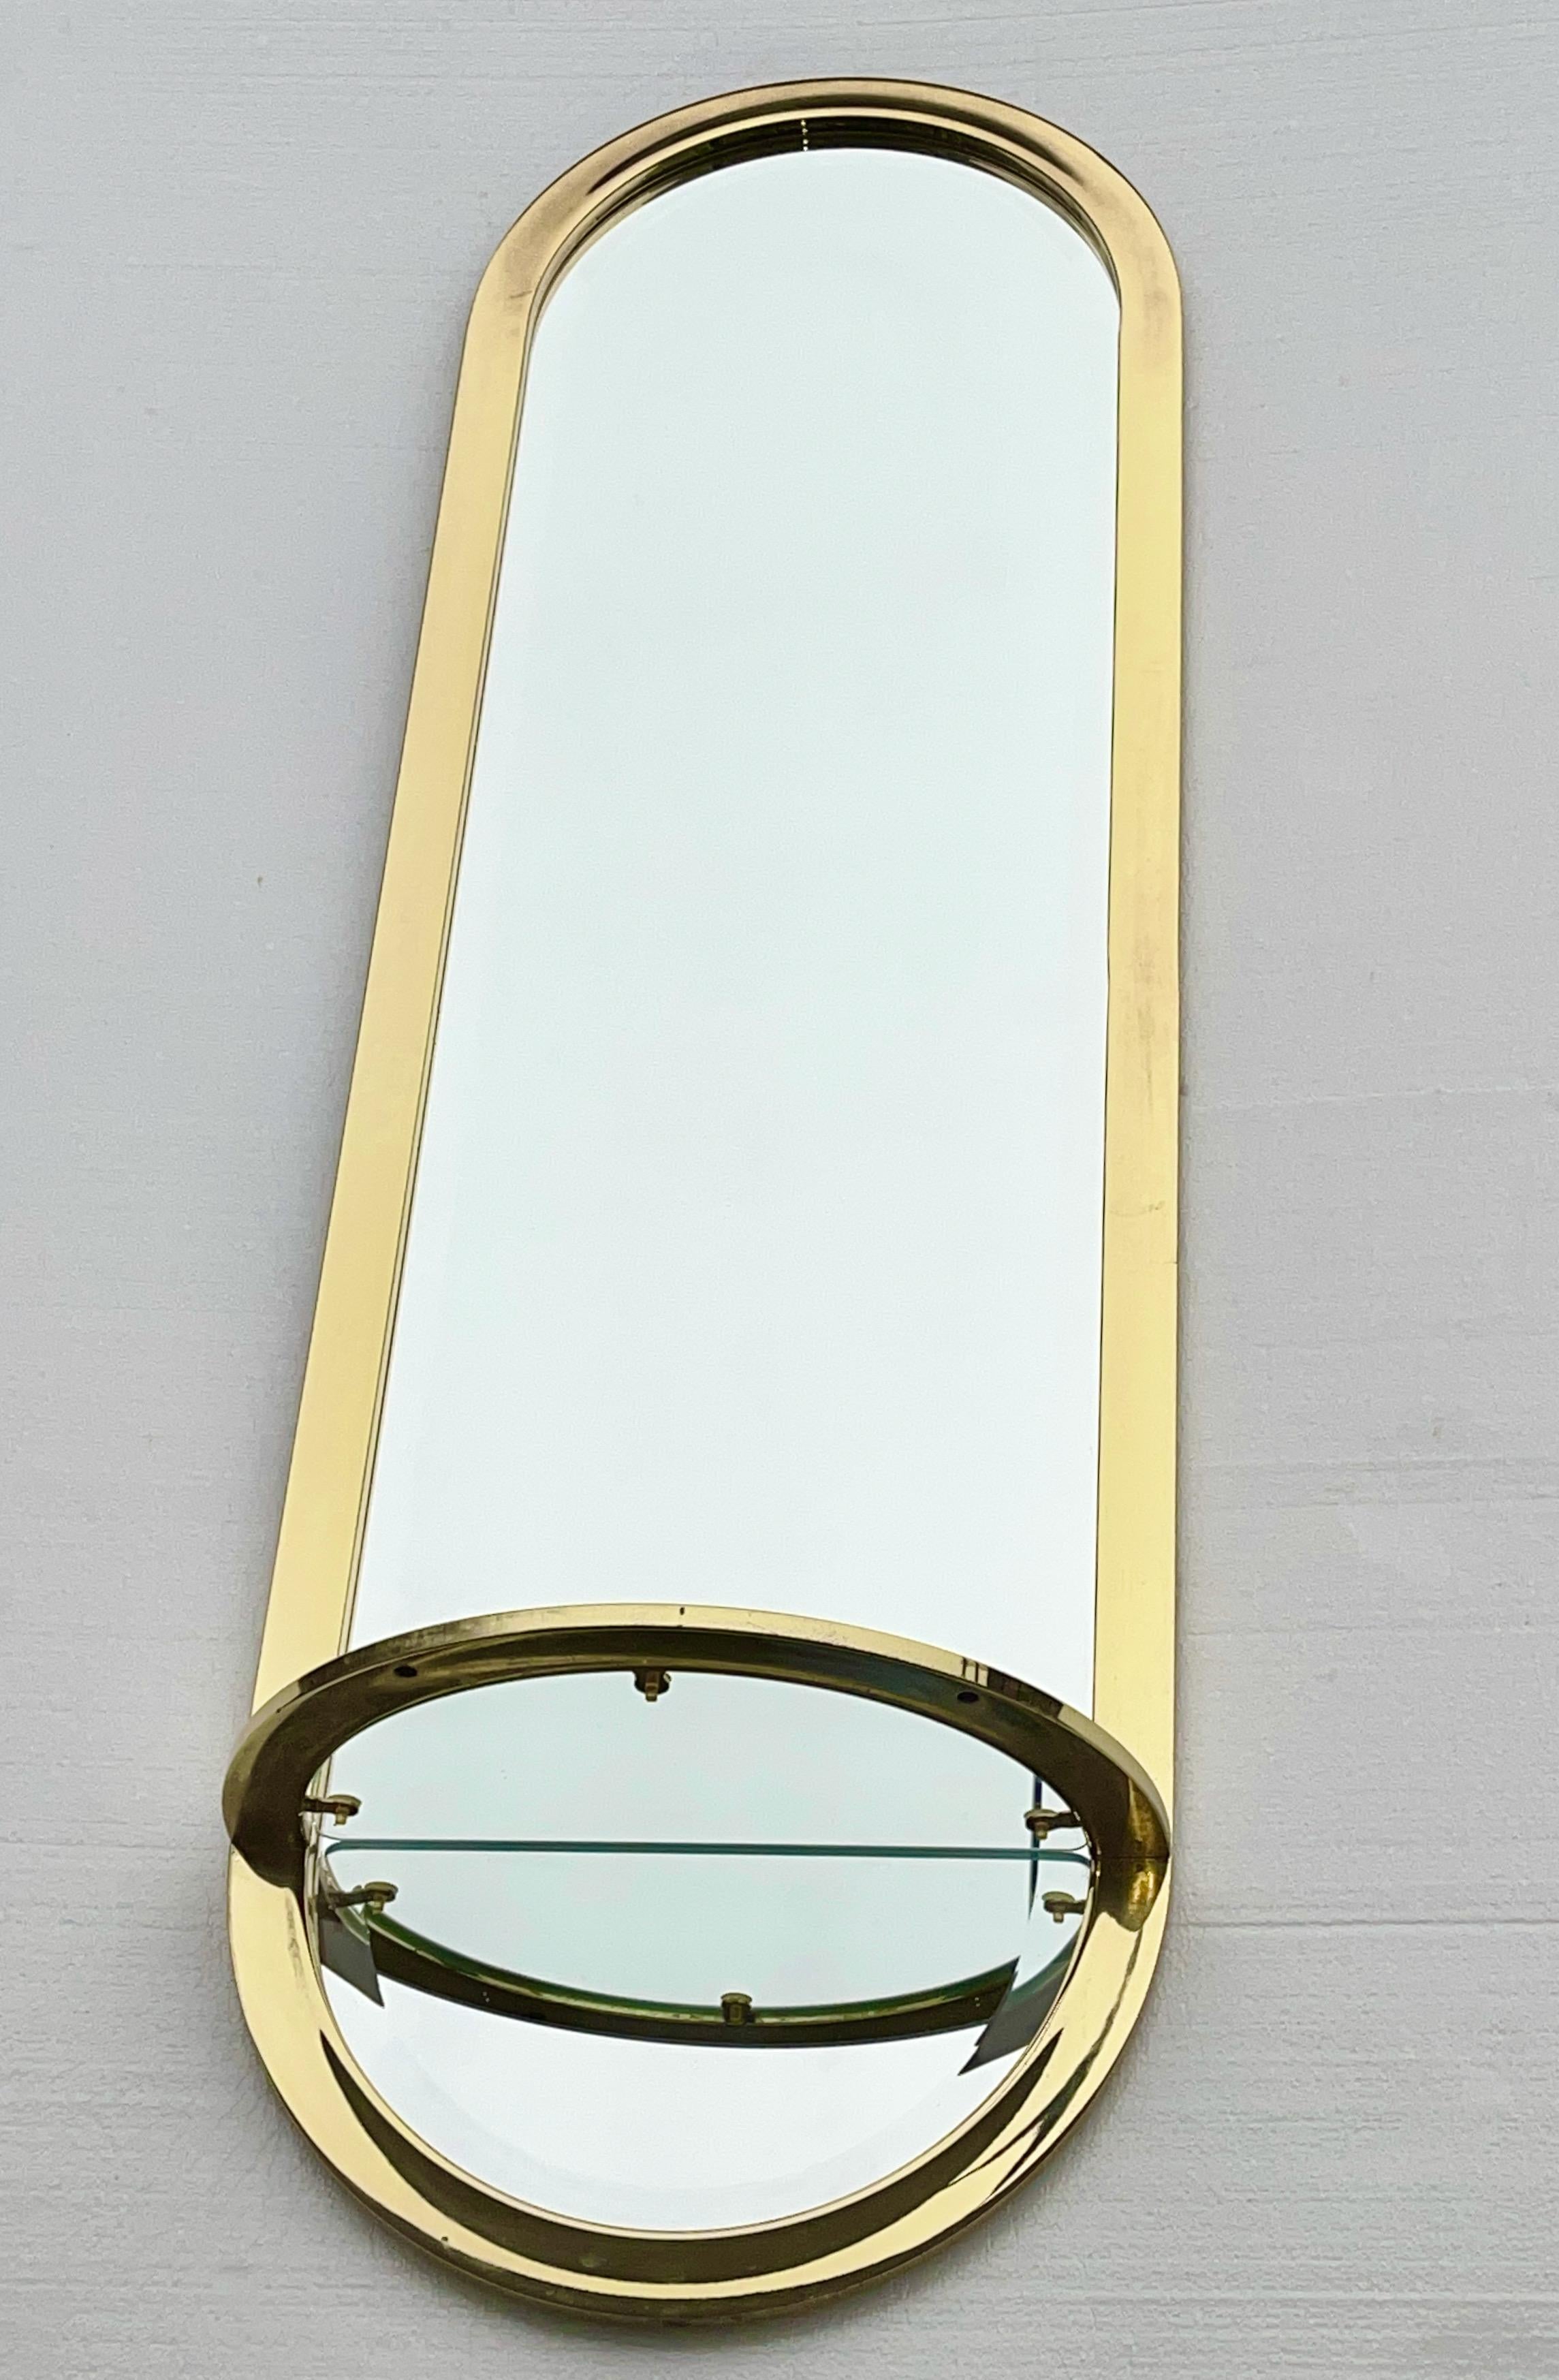 DIA Design Institute America Brass Racetrack Oval Mirror with Demilune Shelf For Sale 4